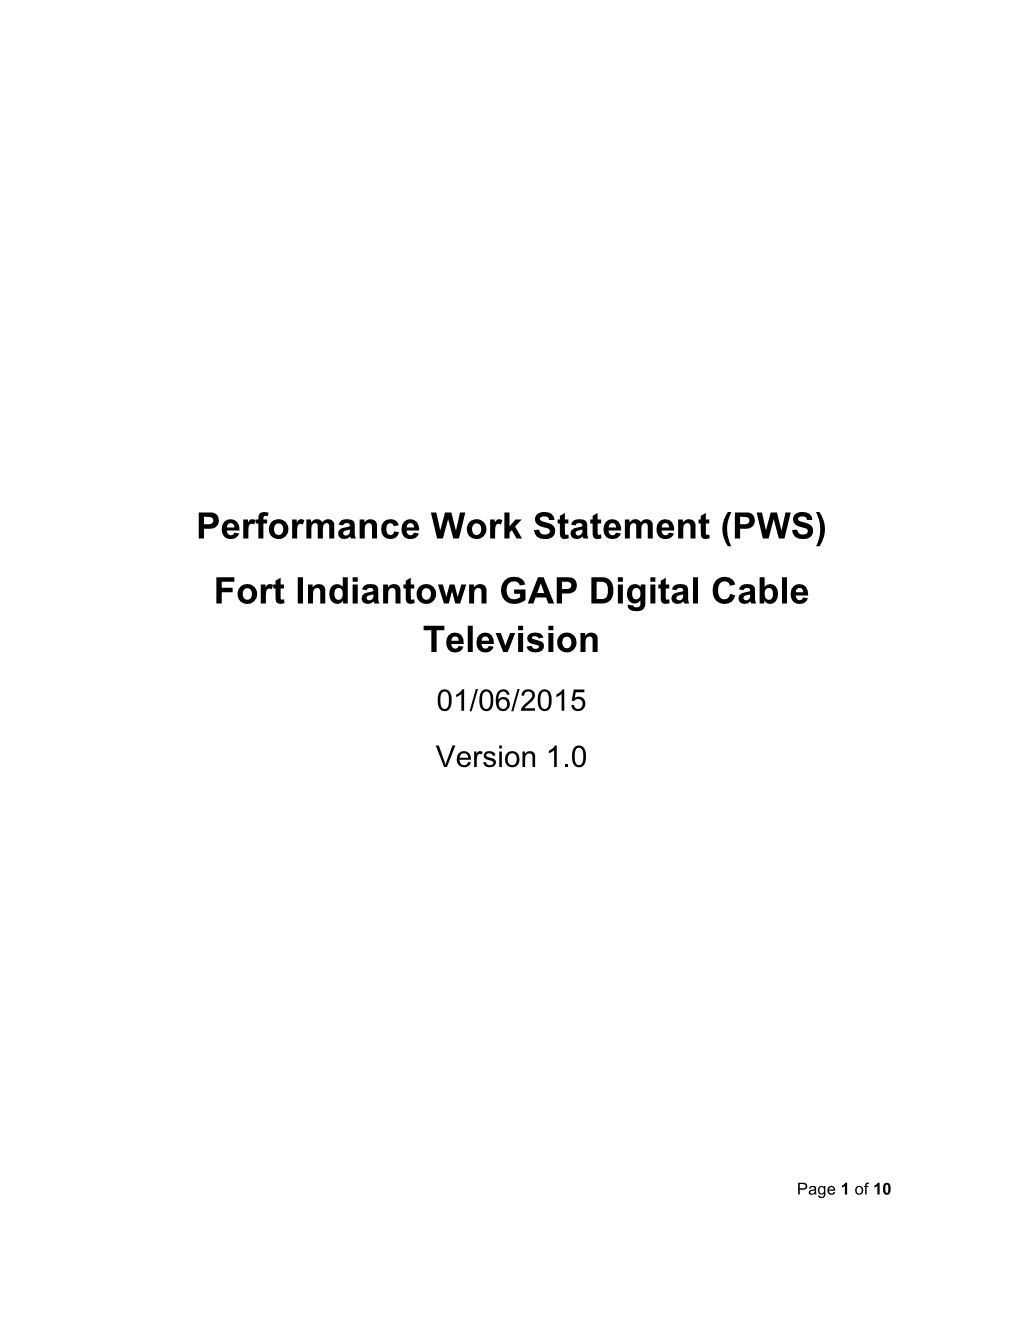 Performance Work Statement (PWS) s1